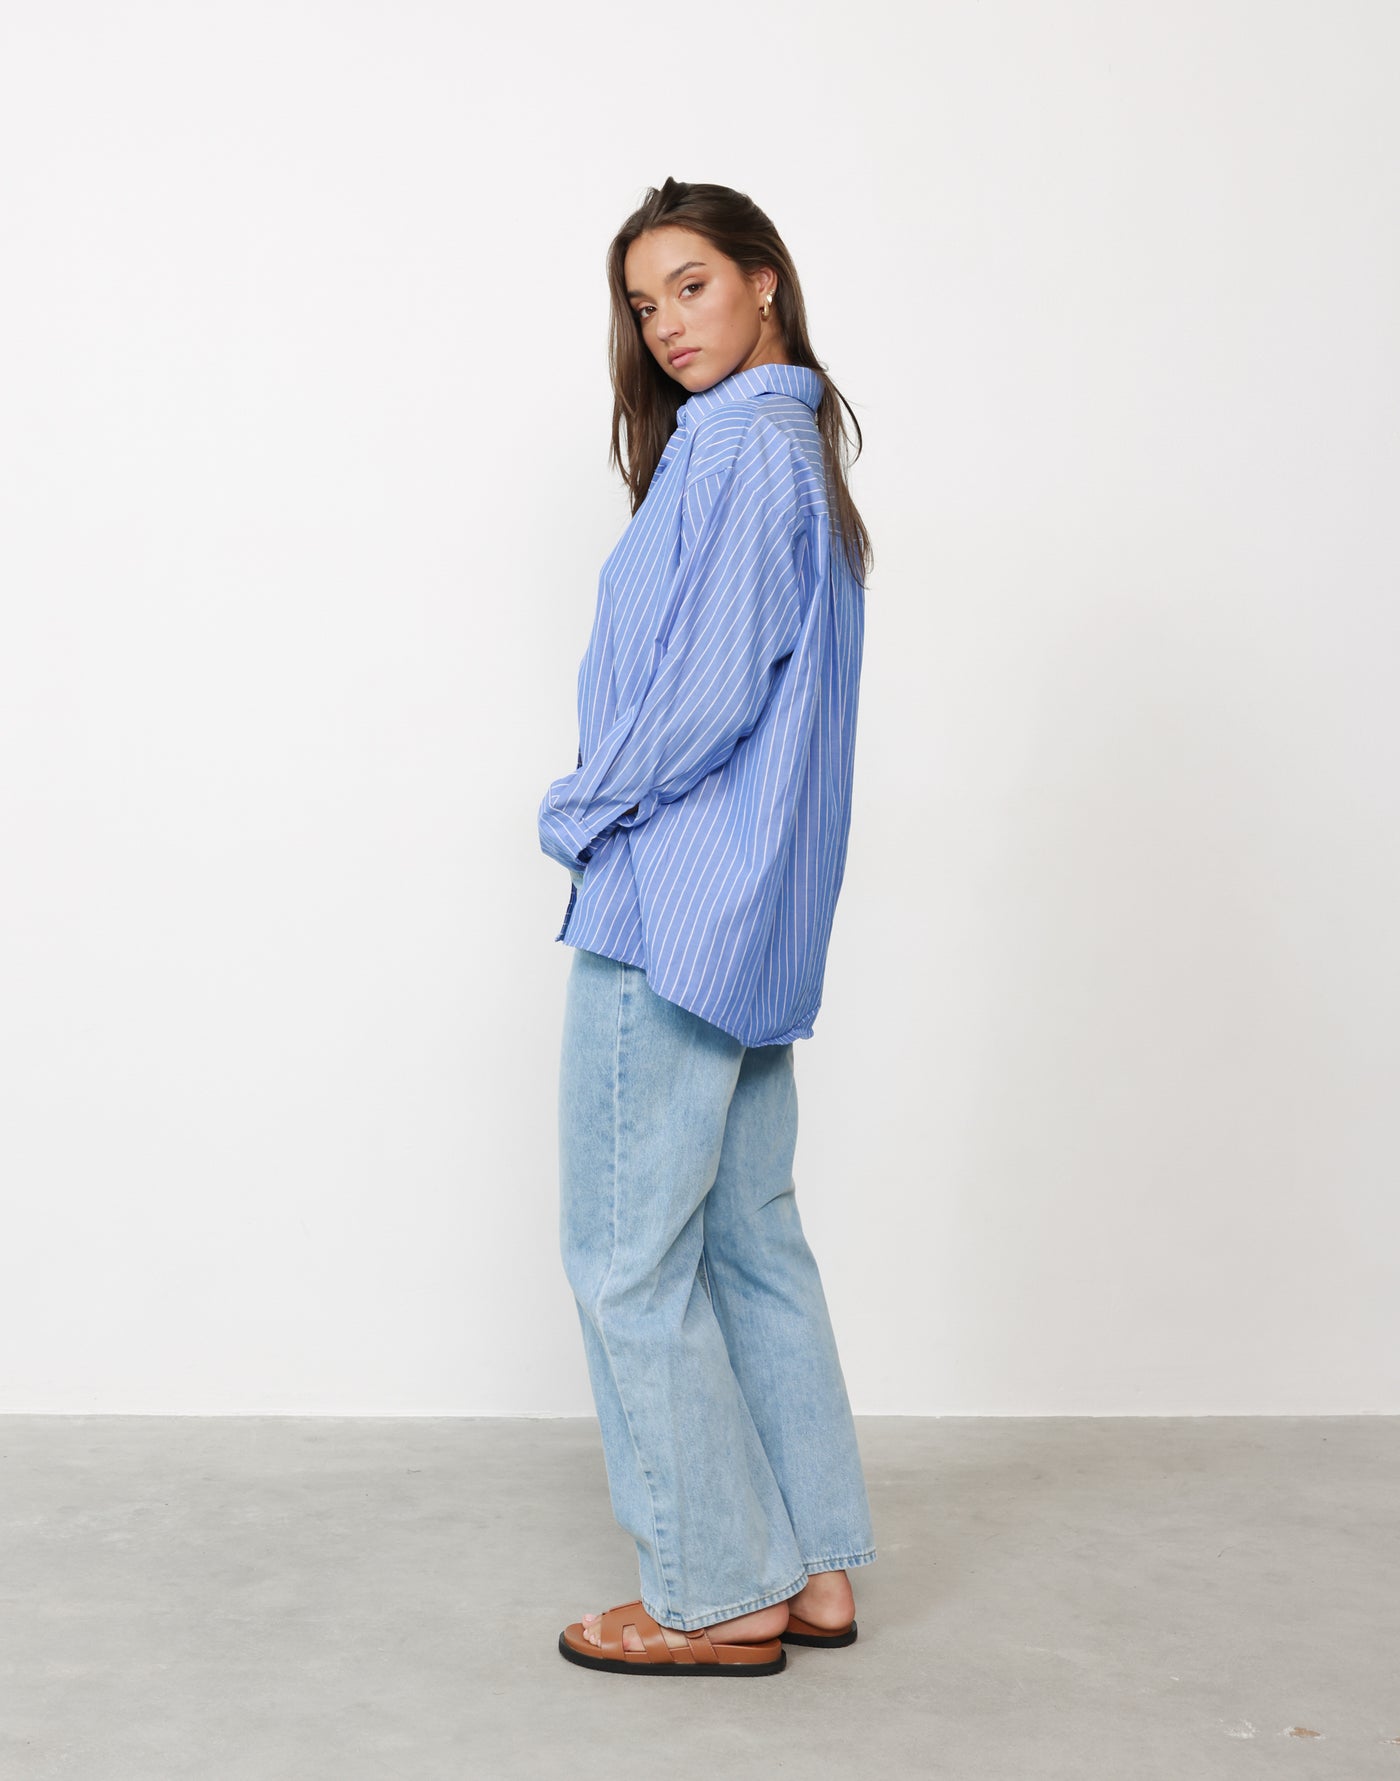 Blanchet Shirt (Cobalt Pinstripe) - Relaxed Fit Pinstripe Long Sleeve Dress Shirt - Women's Top - Charcoal Clothing